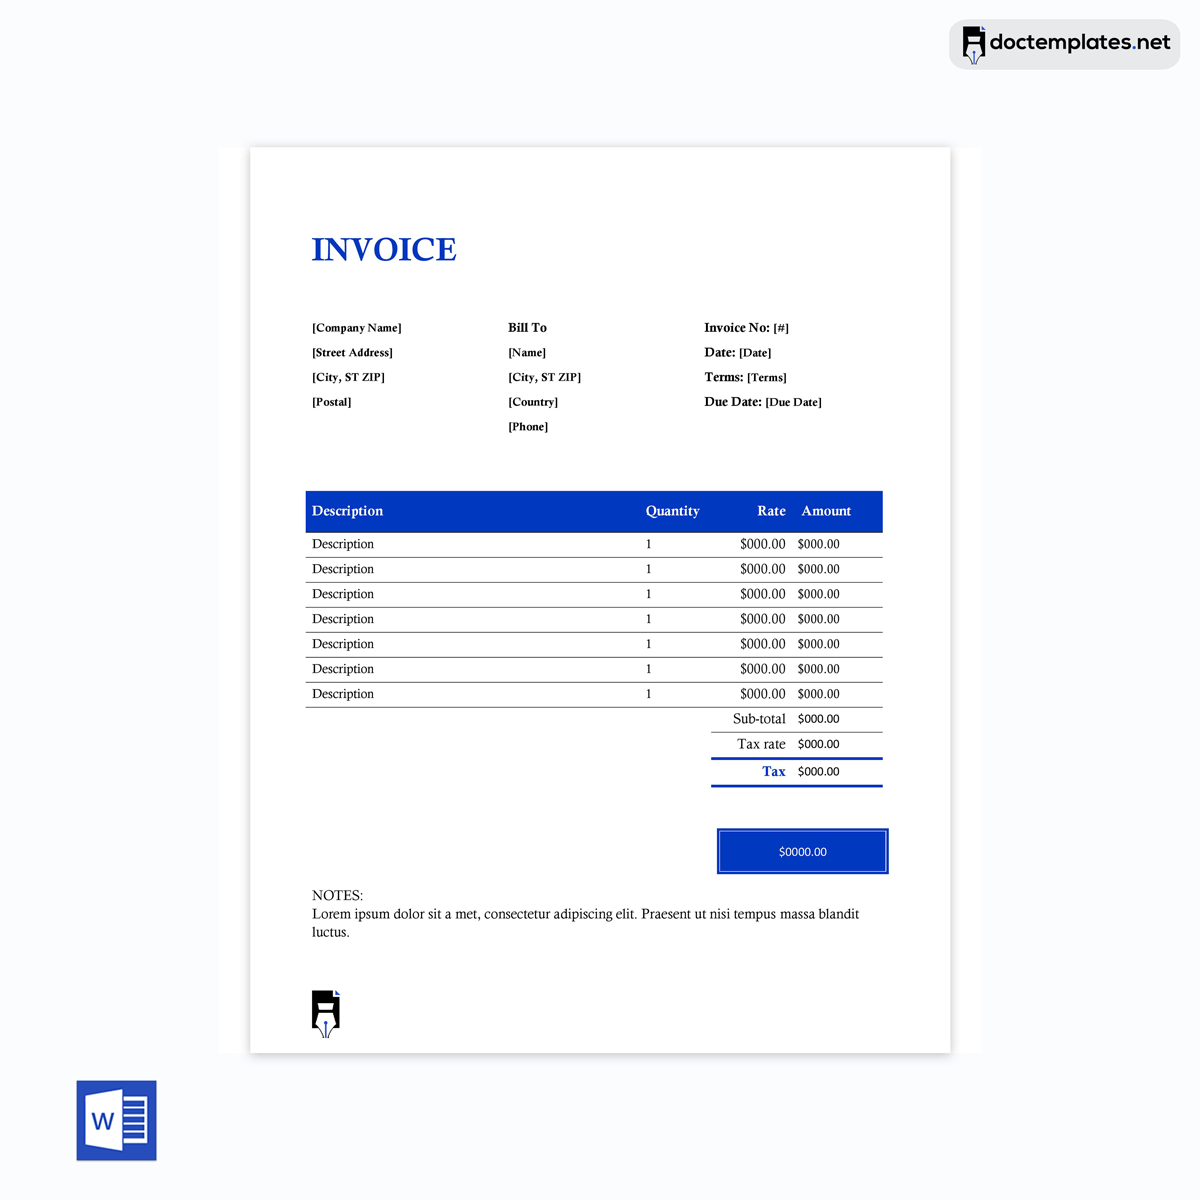 Invoice template PDF
-2